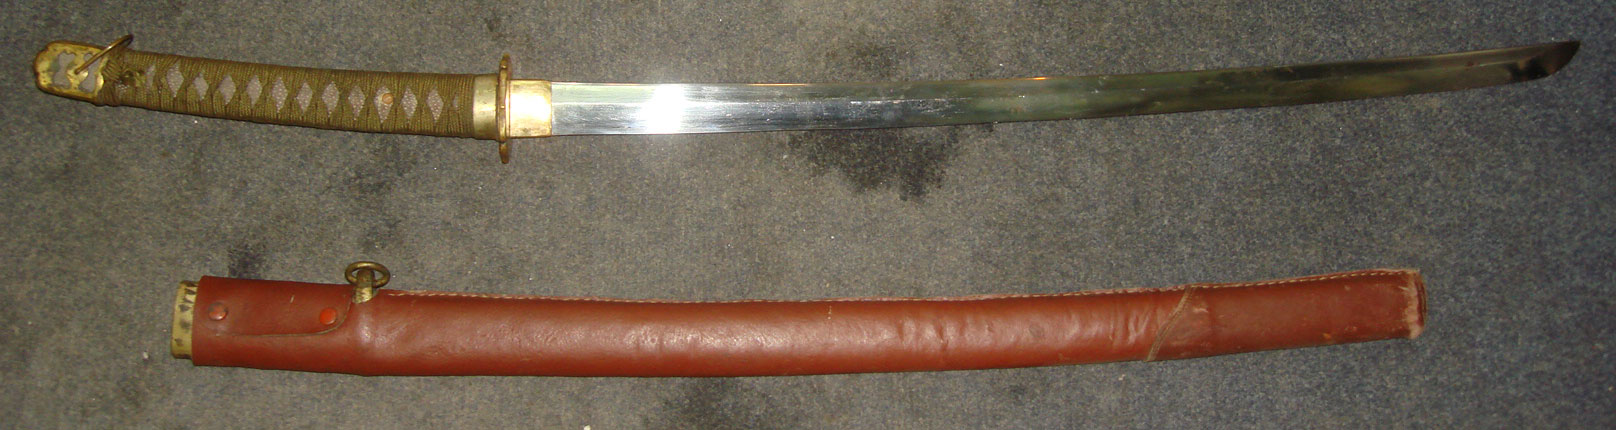 Японский офицерский меч Катана, 1944 год